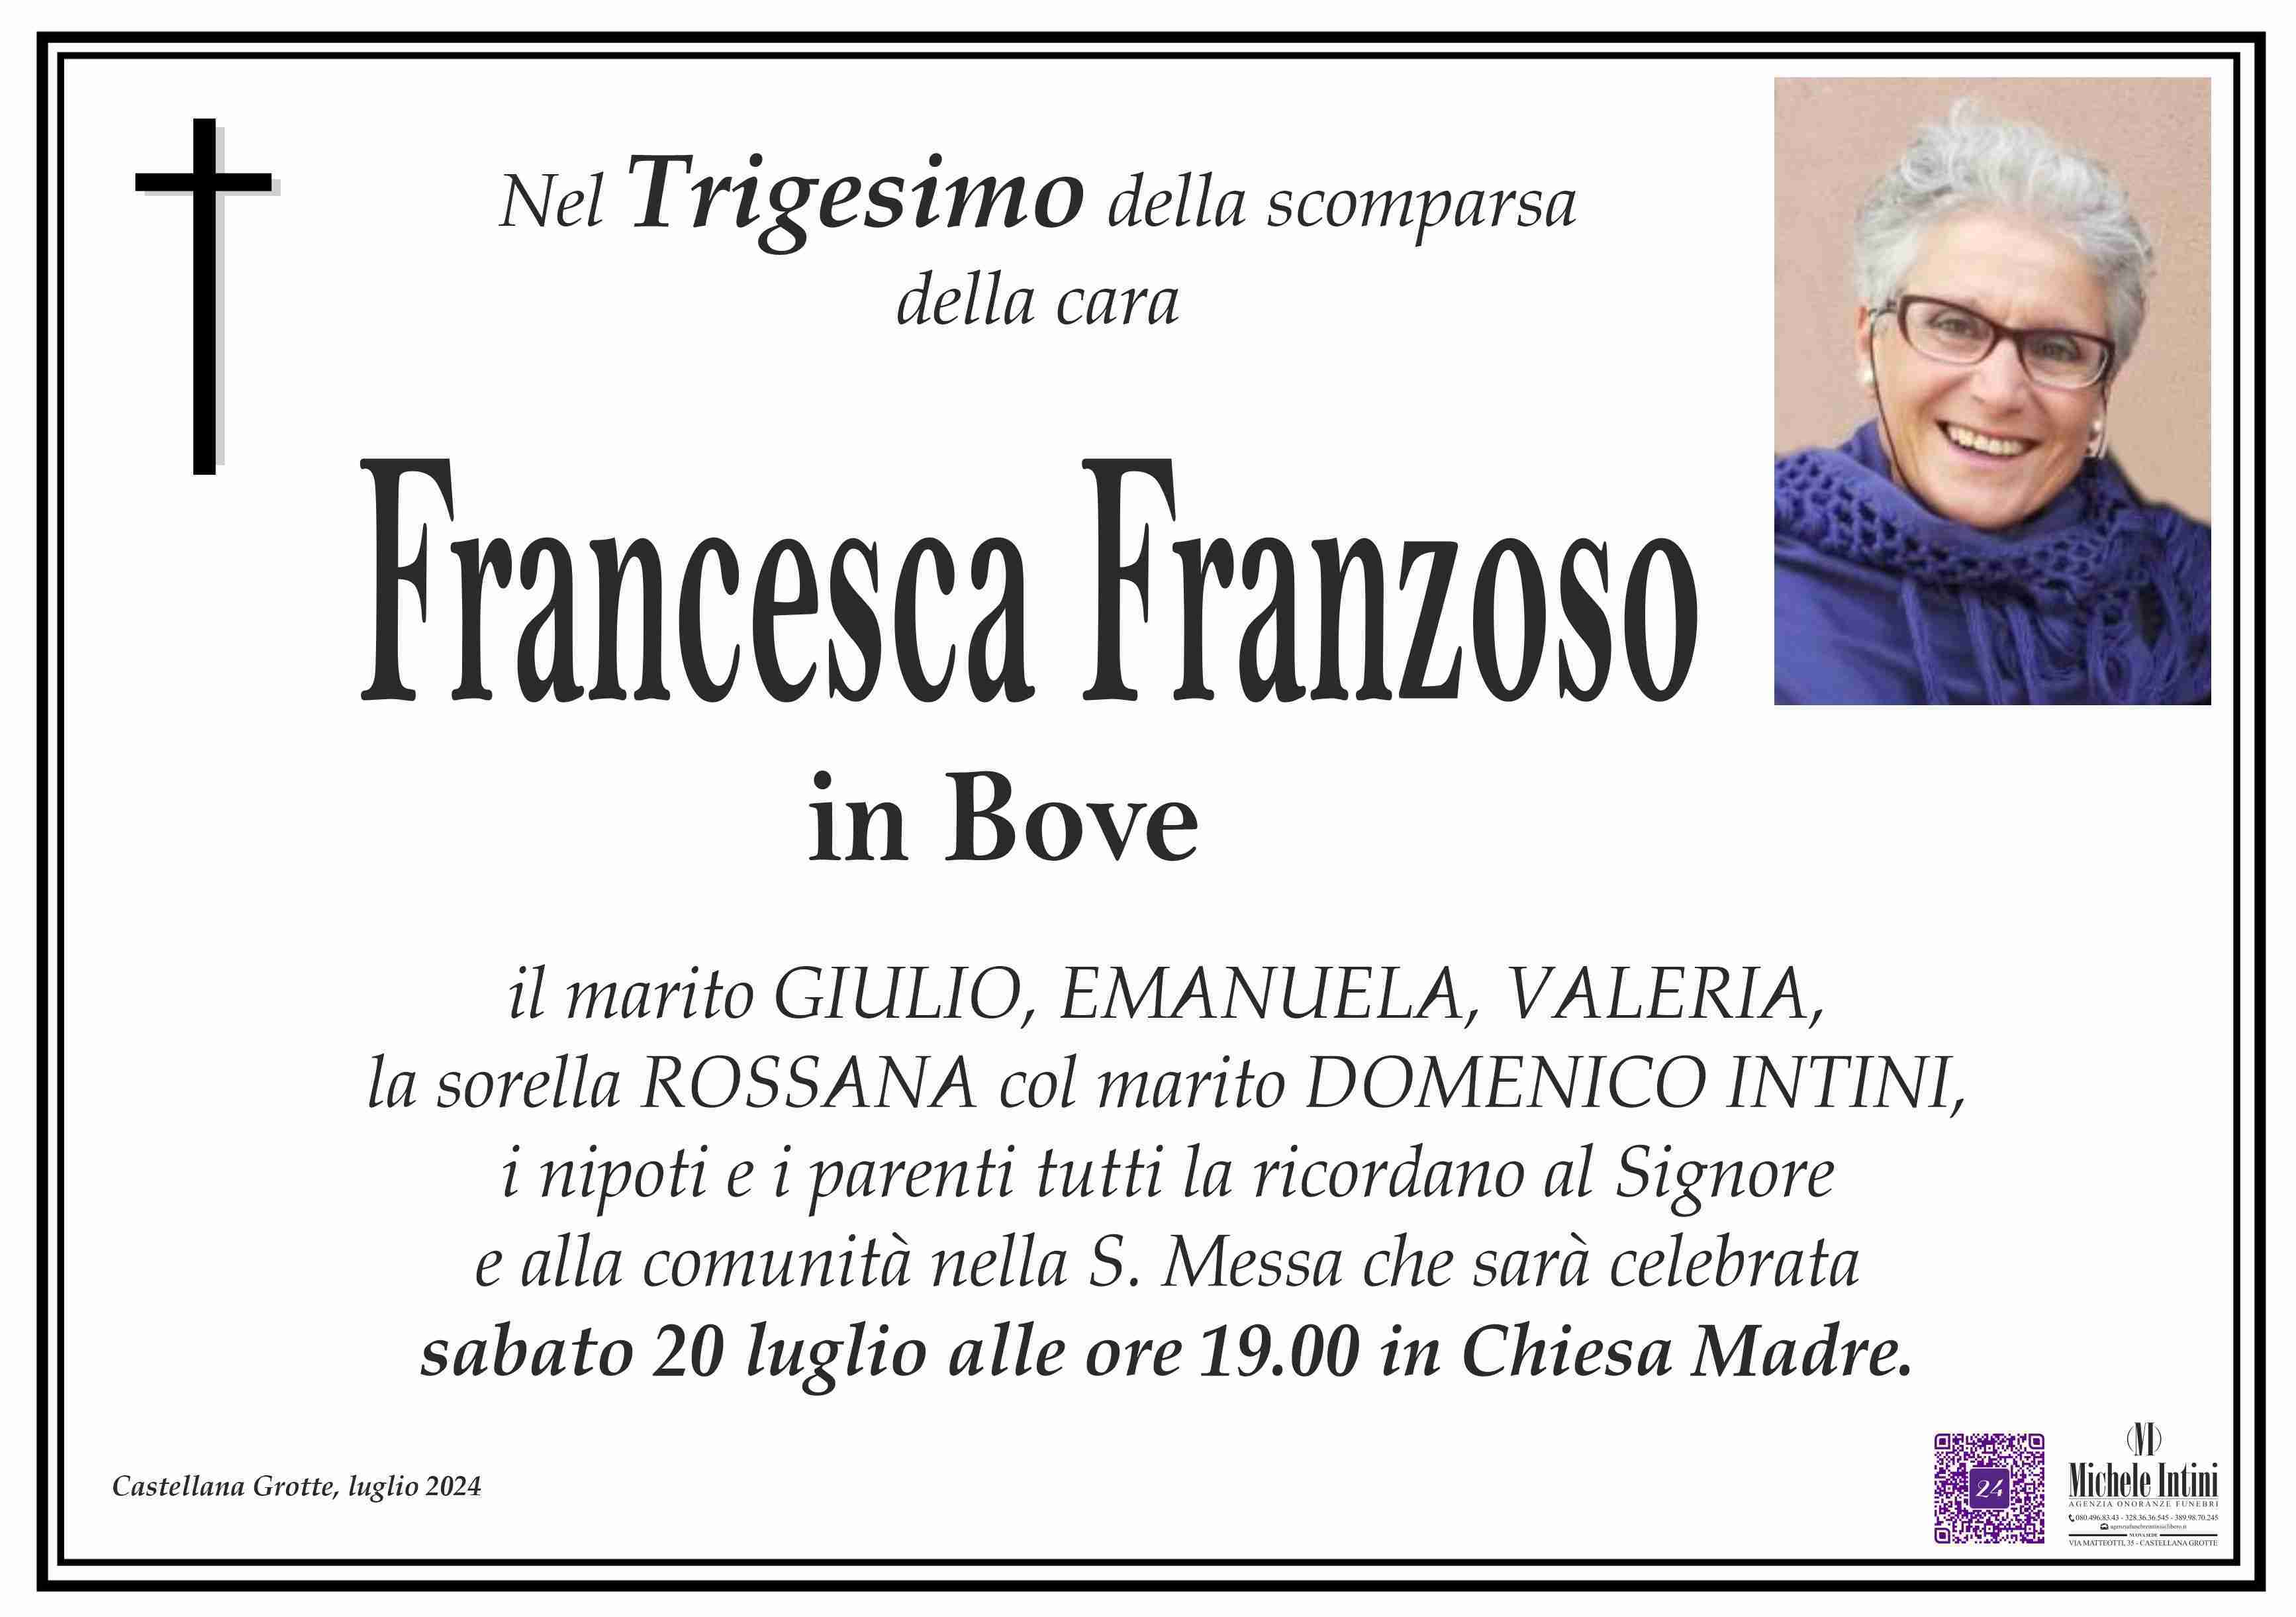 Francesca Franzoso